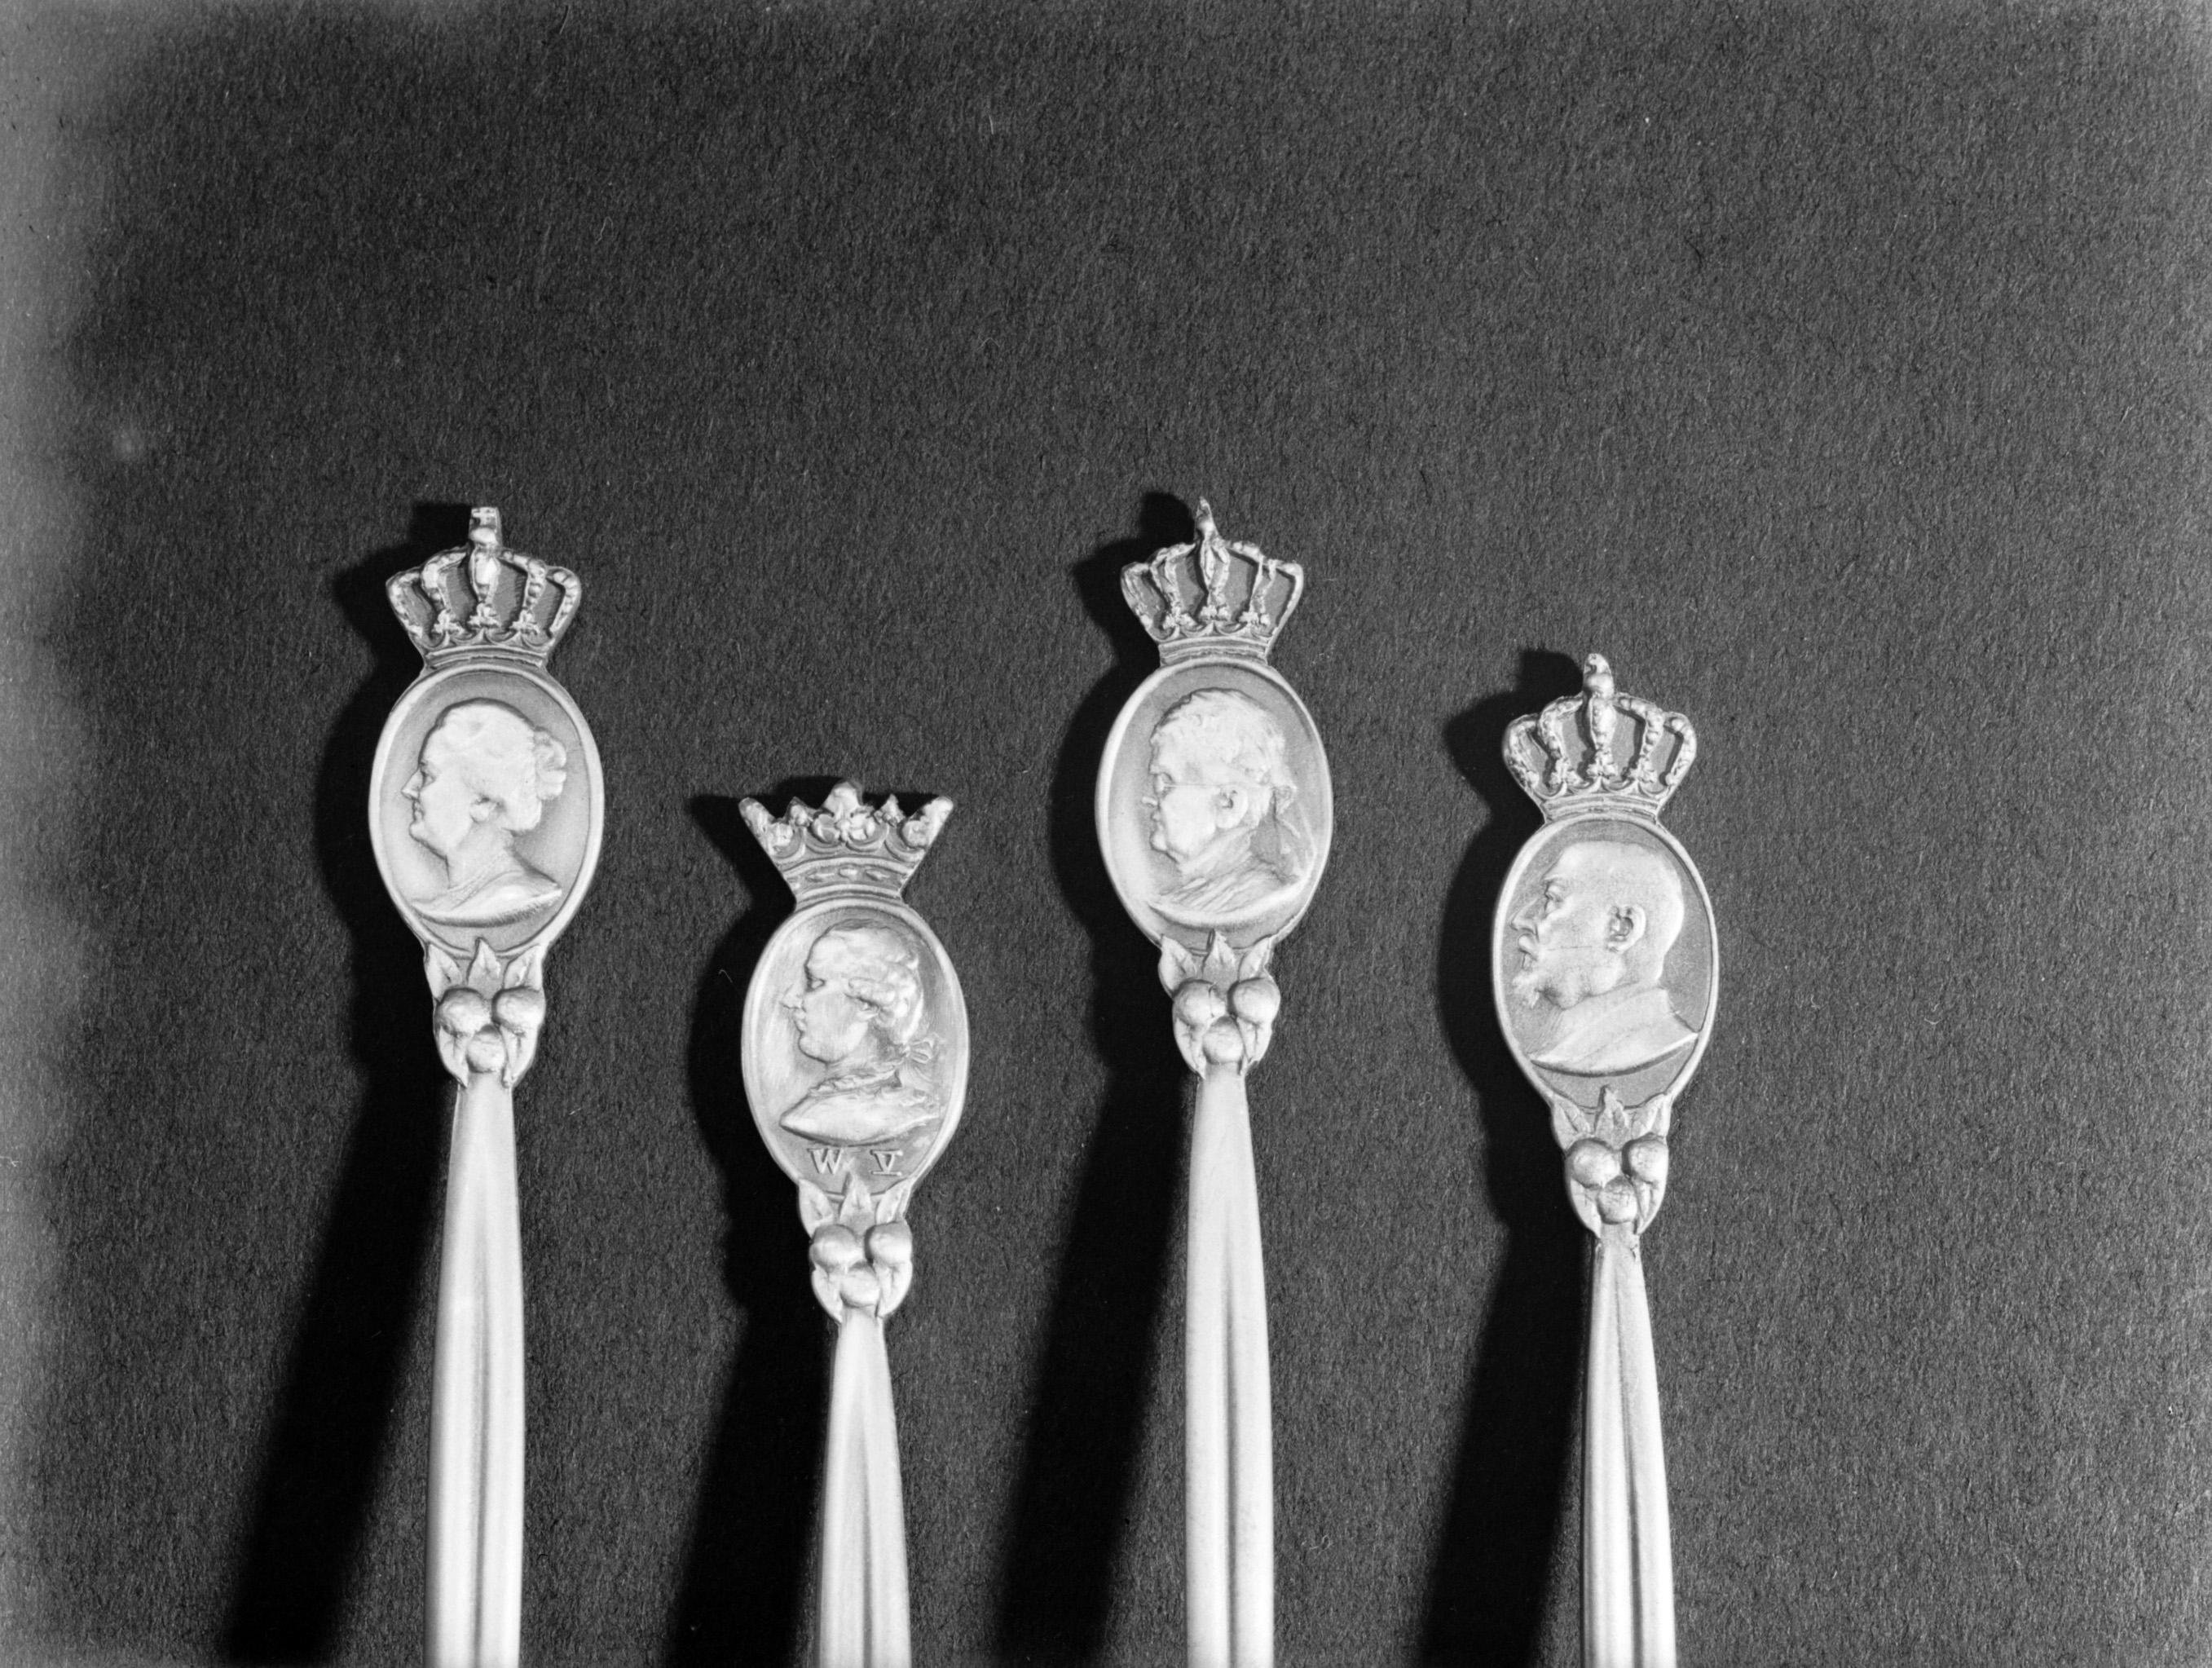 Lichaam Prominent semester File:Lepeltjes met koningin Wilhelmina, Willem V, koningin Emma en een  onbekende van , Bestanddeelnr 190-0554.jpg - Wikimedia Commons